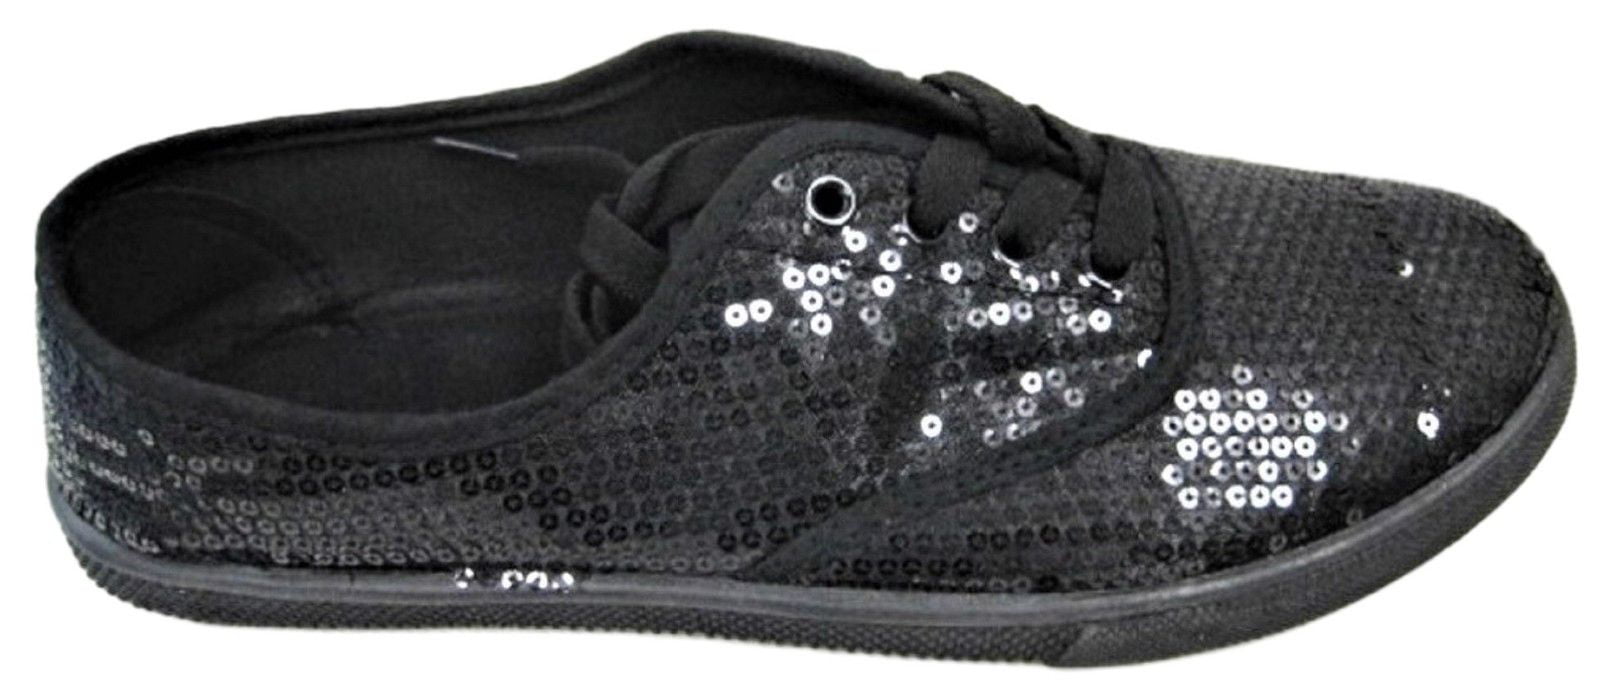 glitter tennis shoes black